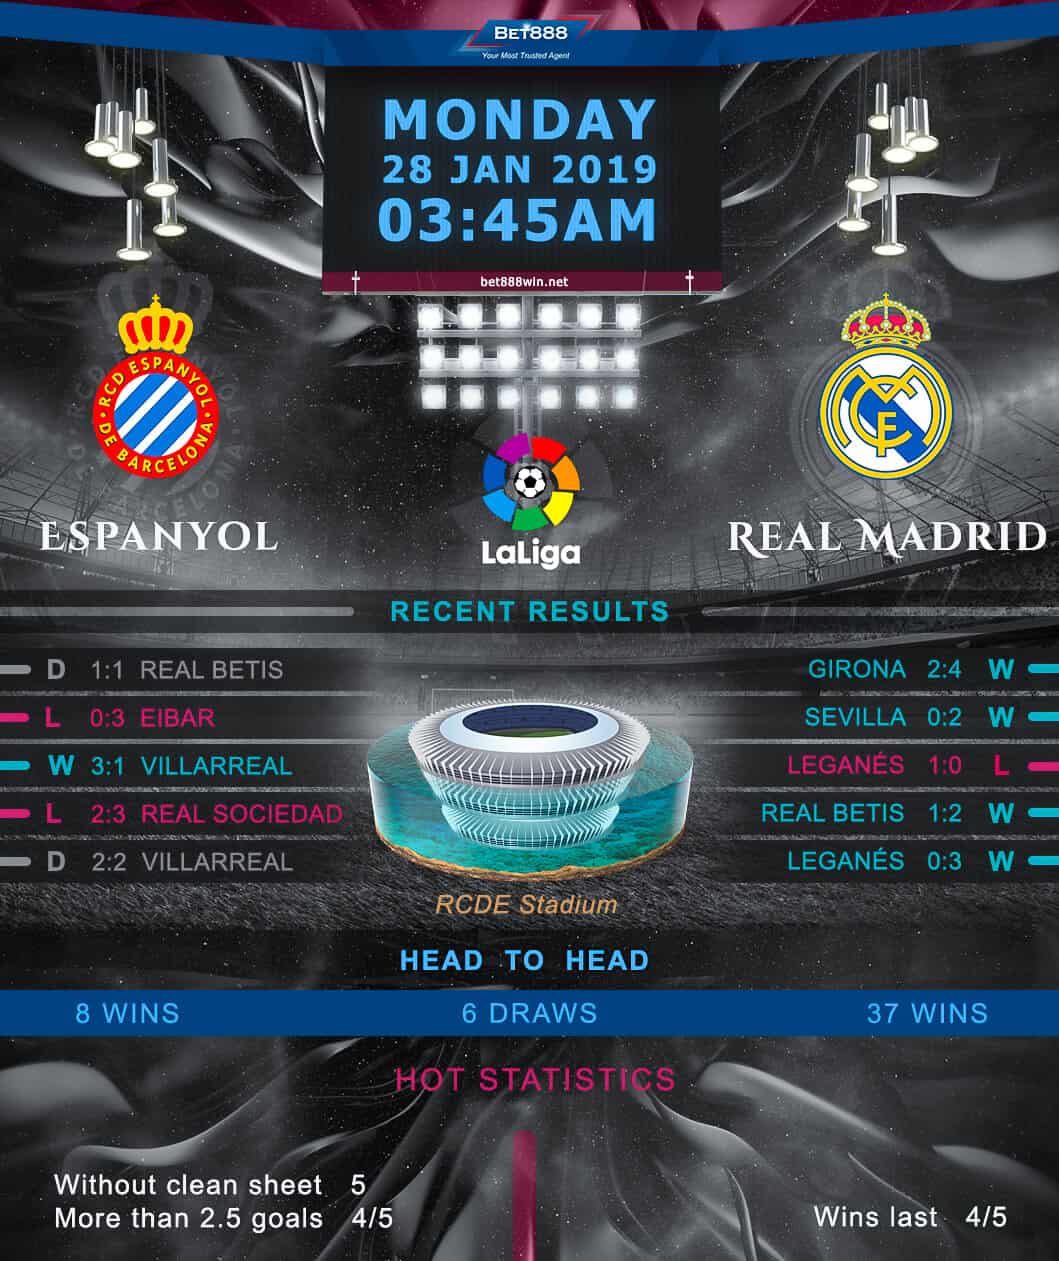 Espanyol vs Real Madrid 28/01/19